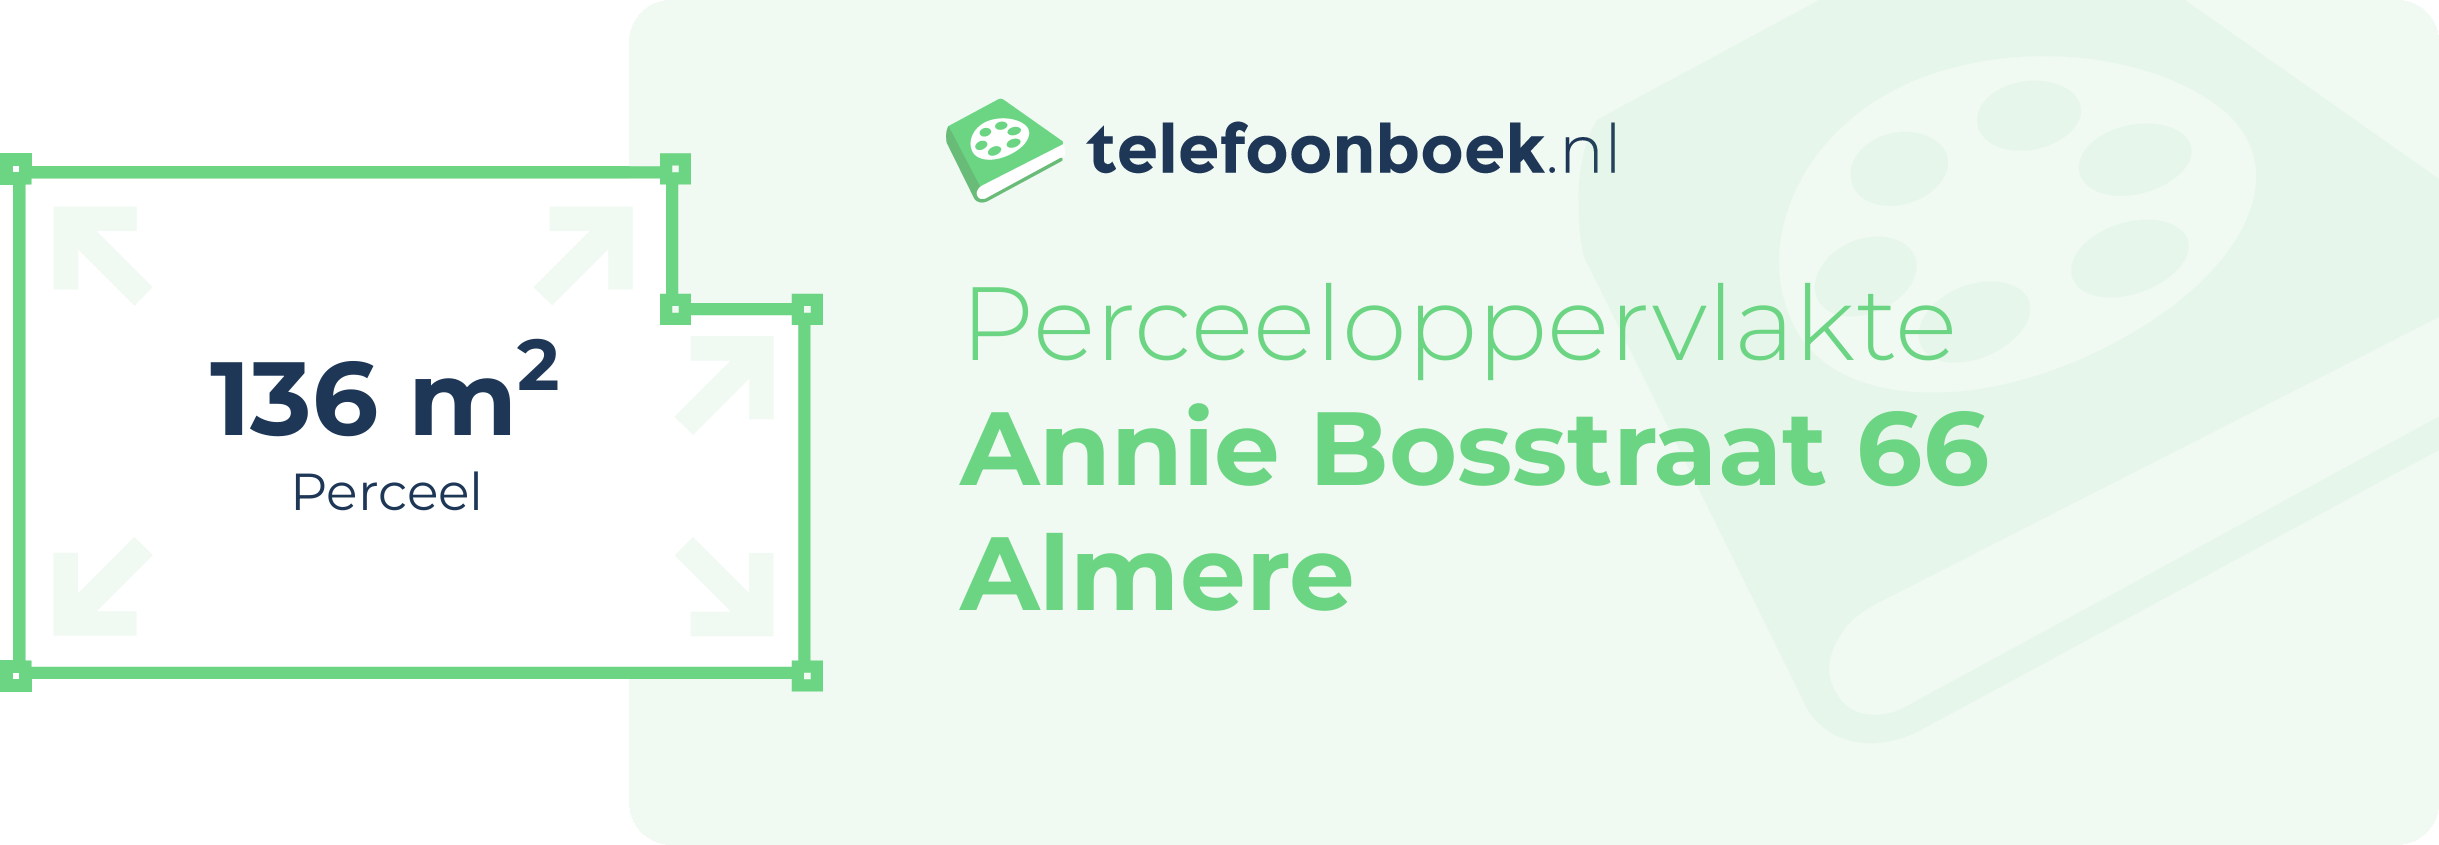 Perceeloppervlakte Annie Bosstraat 66 Almere